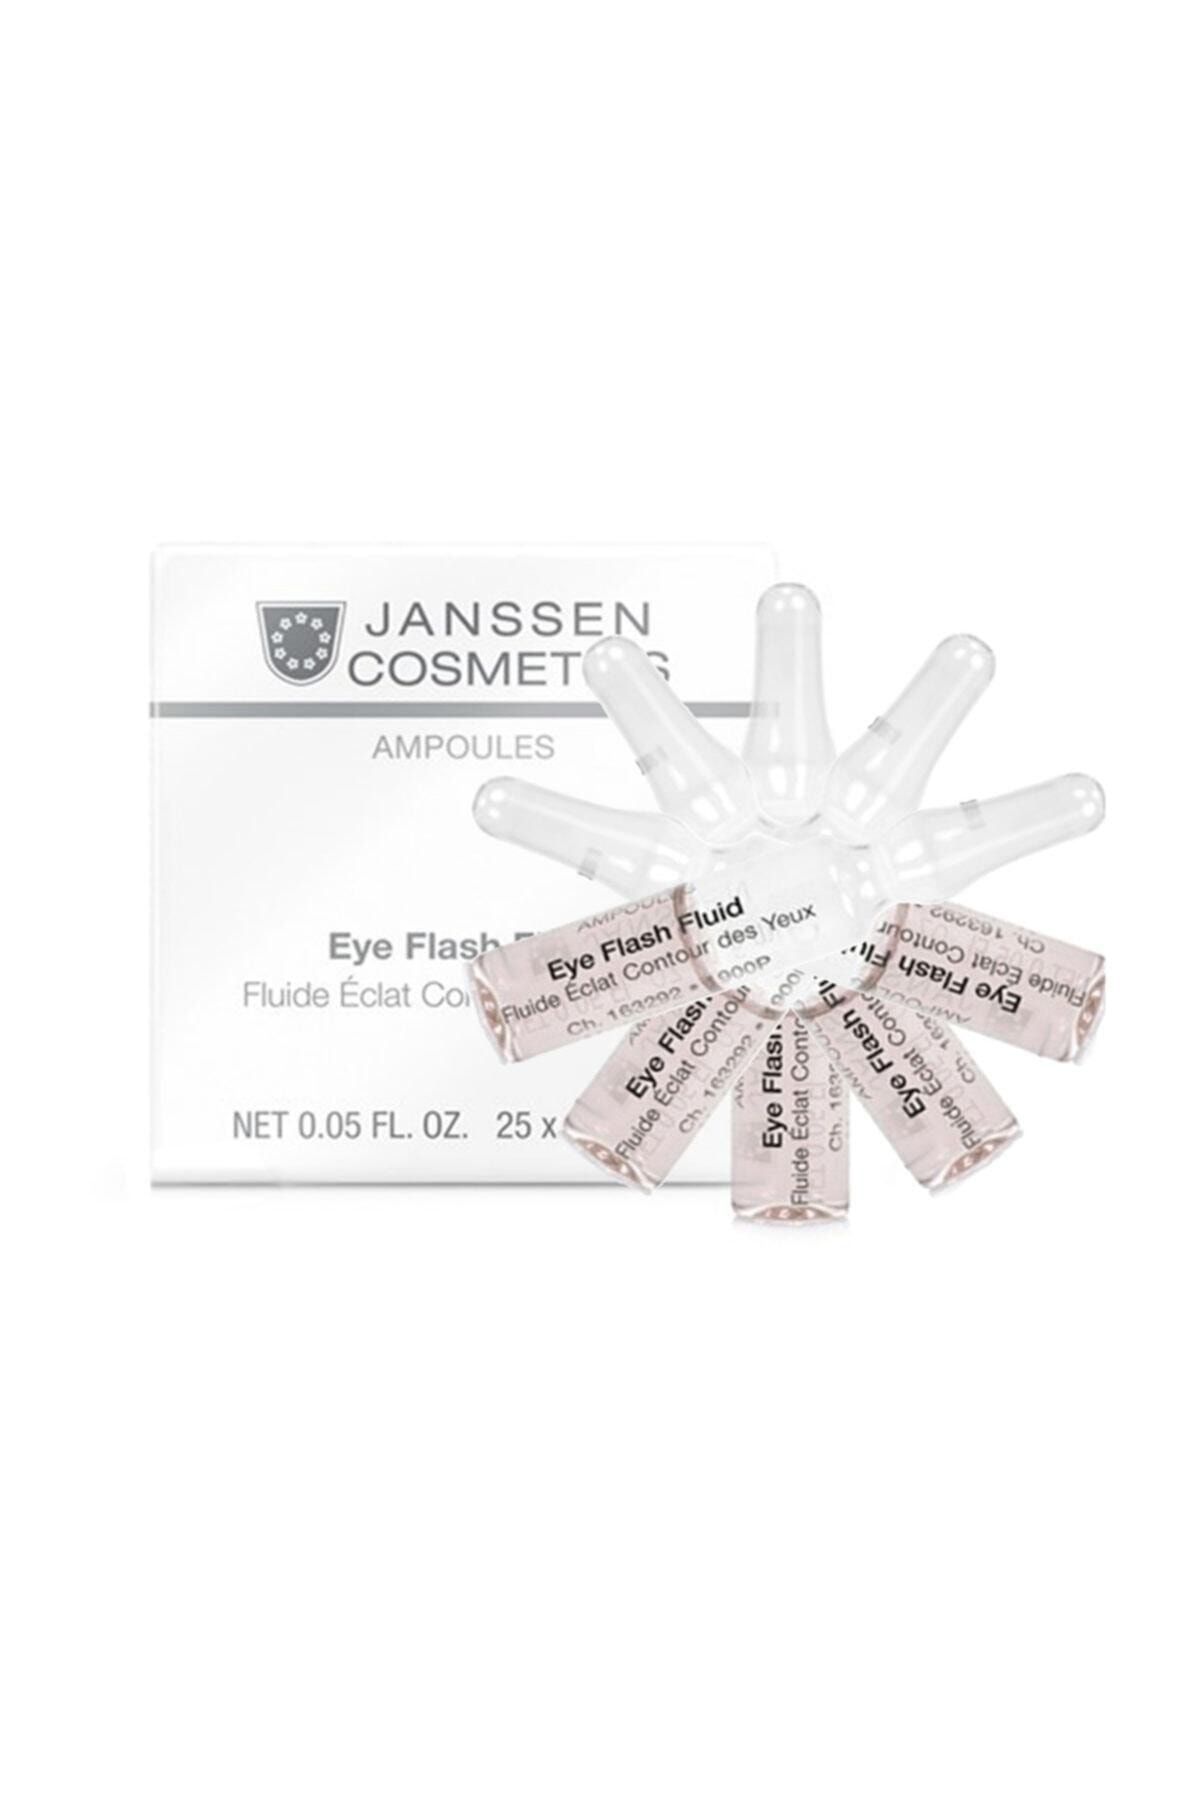 Janssen Cosmetics Eye Flash Fluid 2 Ml X 5 Ampul